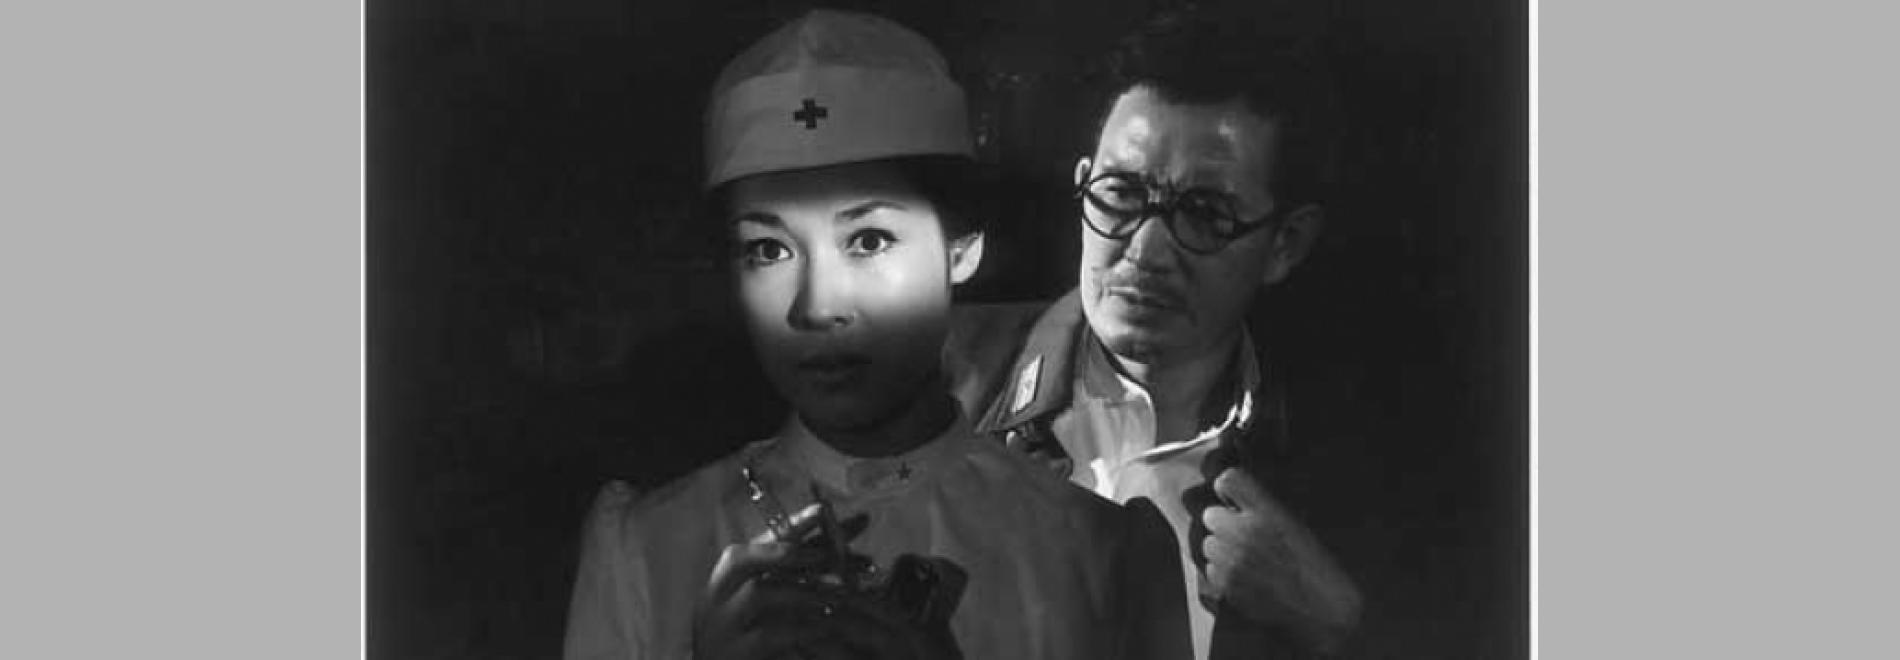 Akai tenshi / L'àngel roig (Yasuzô Masumura, 1966)